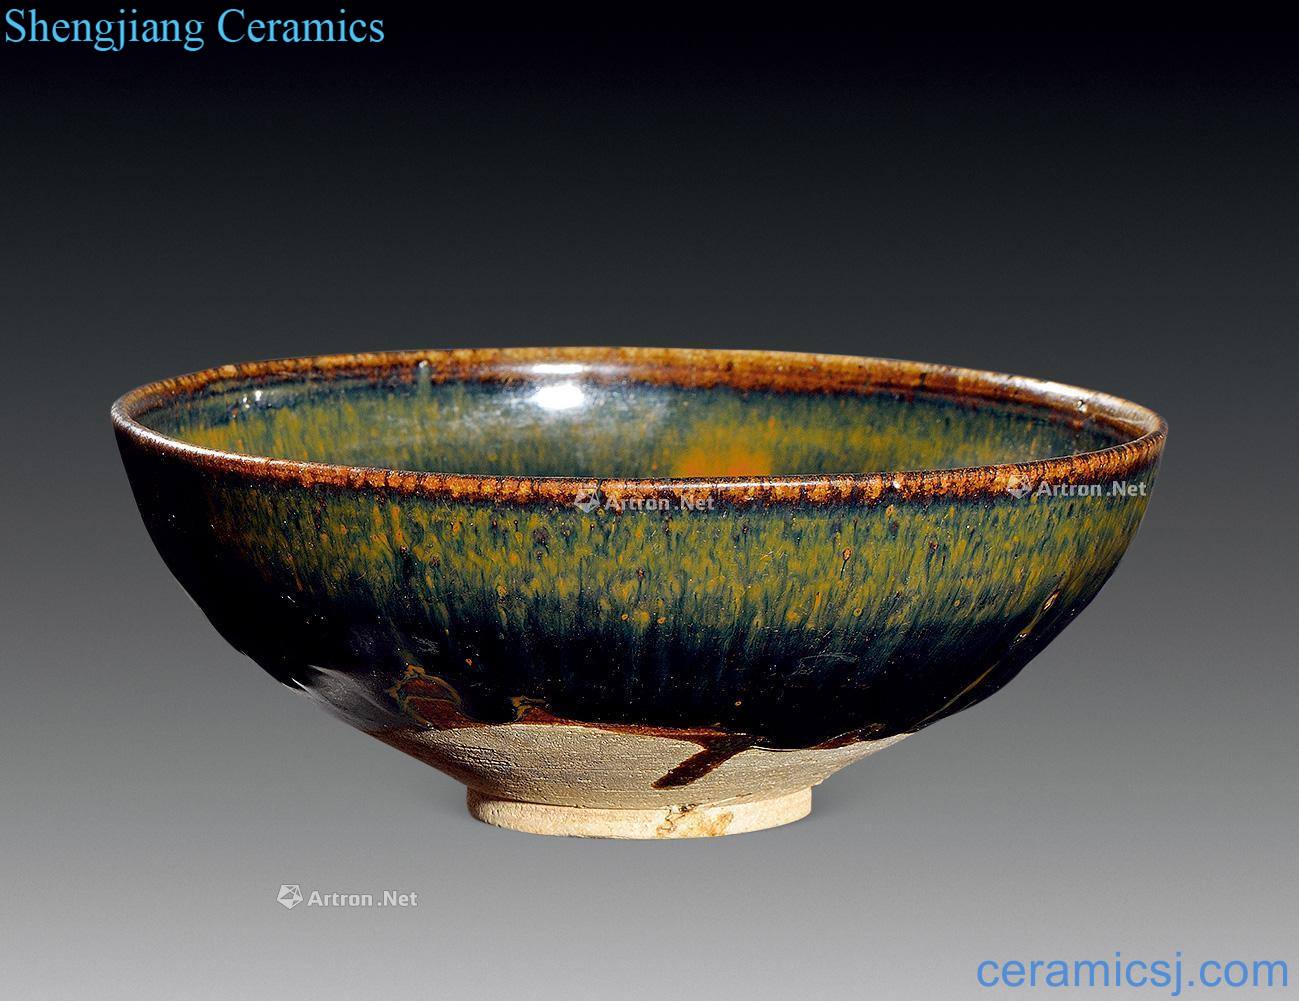 Song/yuan The black glaze blotches bowl